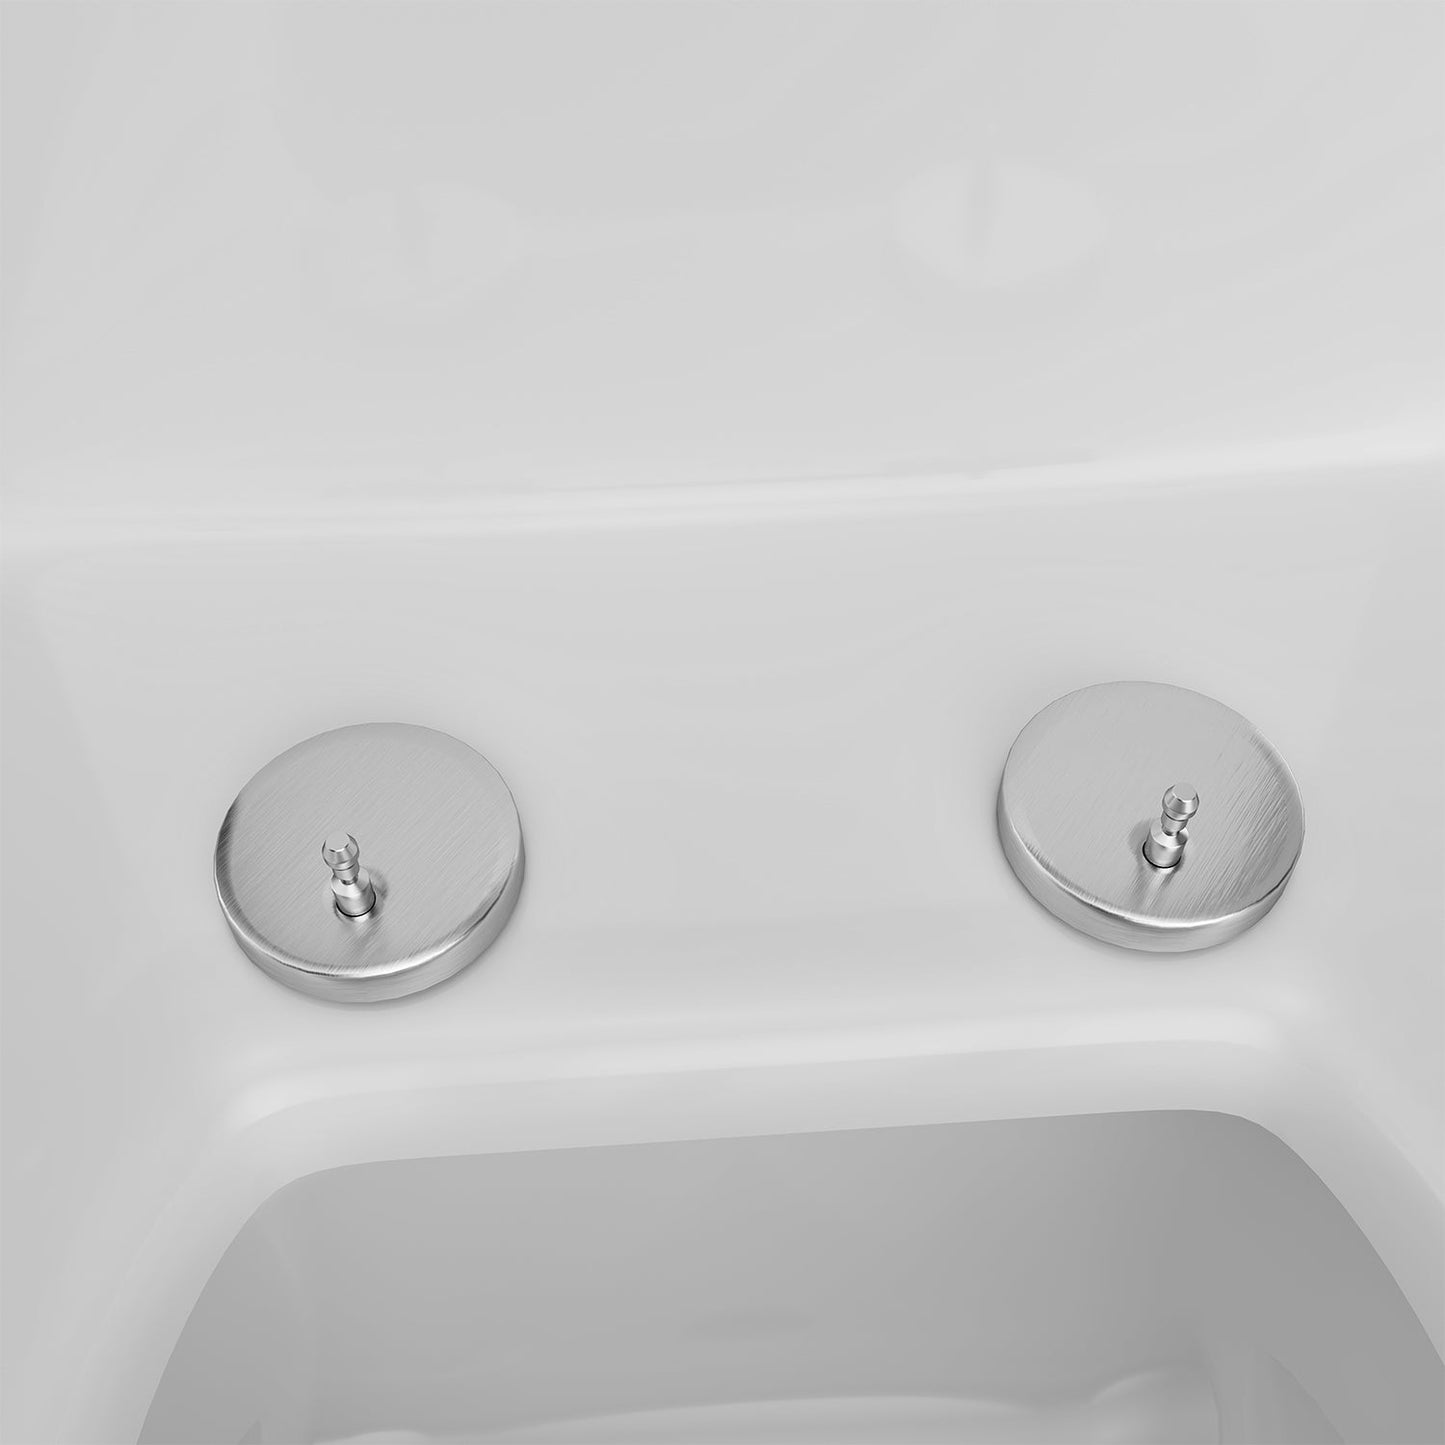 Eviva Denali One Piece Toilet in White